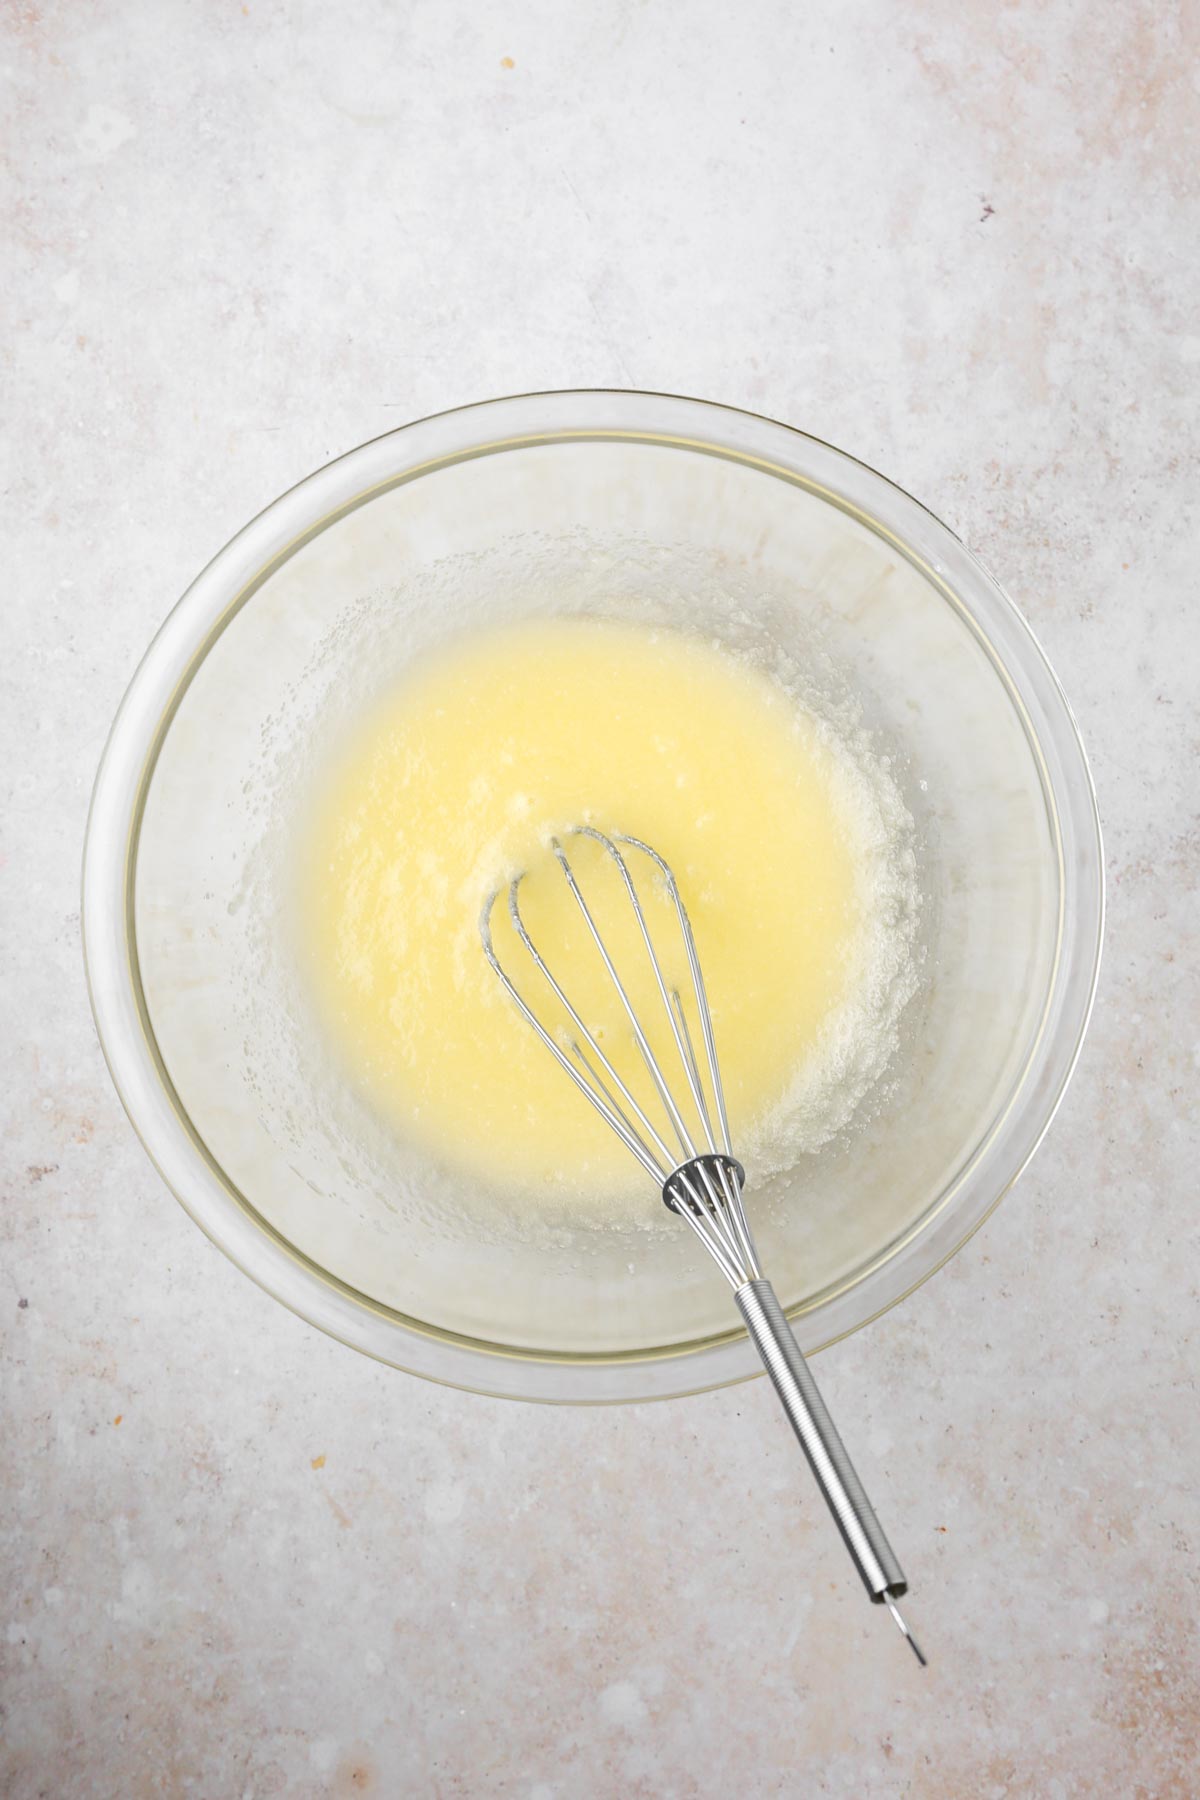 Whisking the vegan butter, sugar, applesauce, vanilla, and almond milk into a creamy yellow mixture.